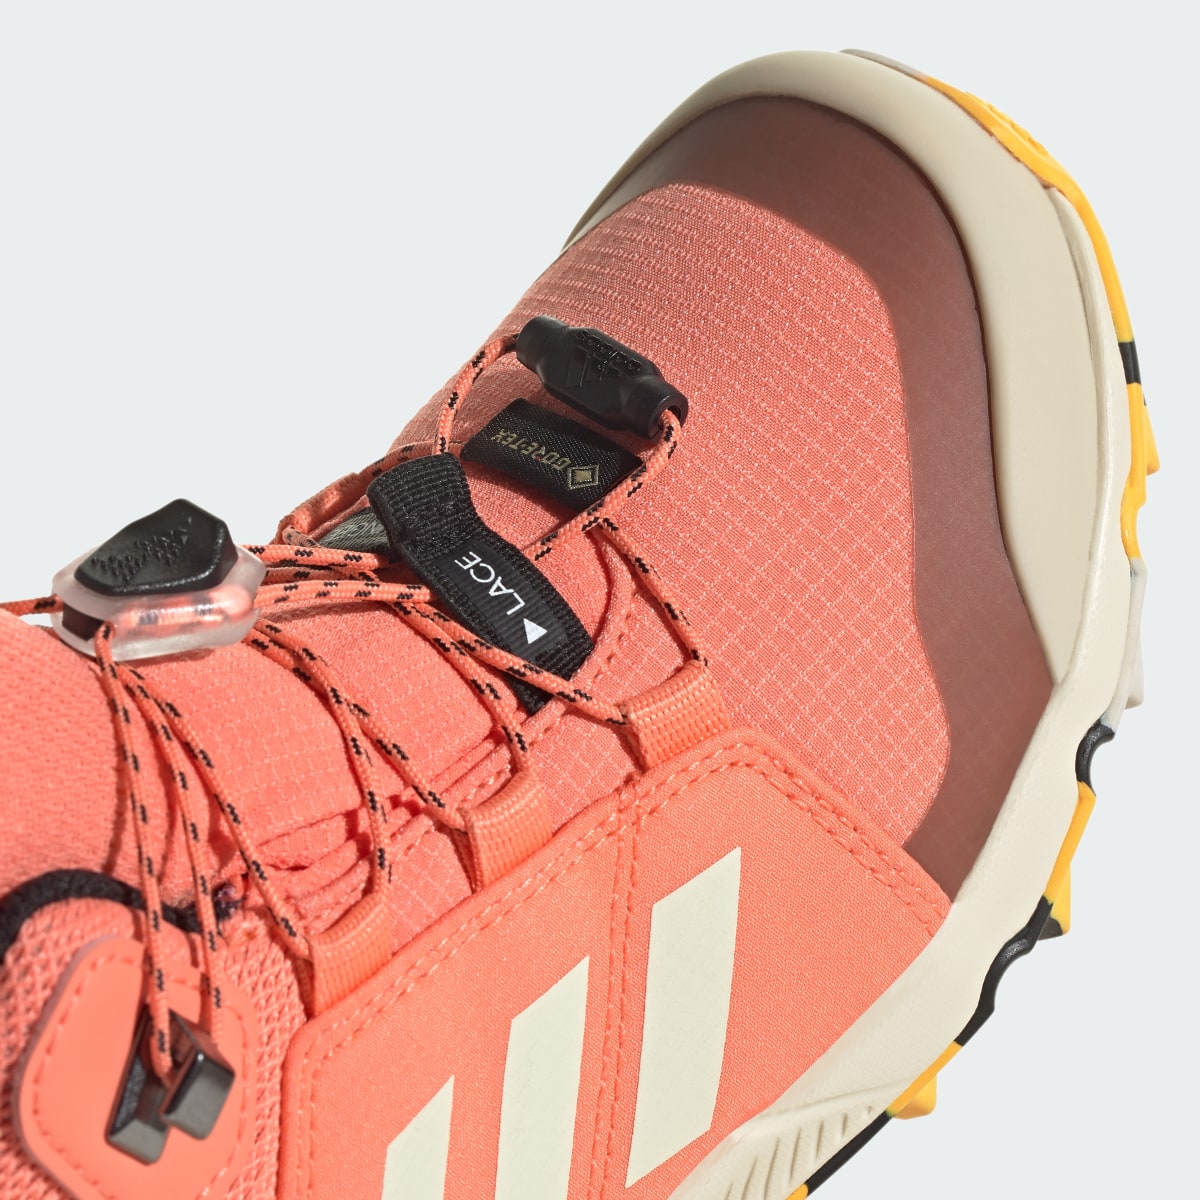 Adidas Chaussure de randonnée Organizer Mid GORE-TEX. 11